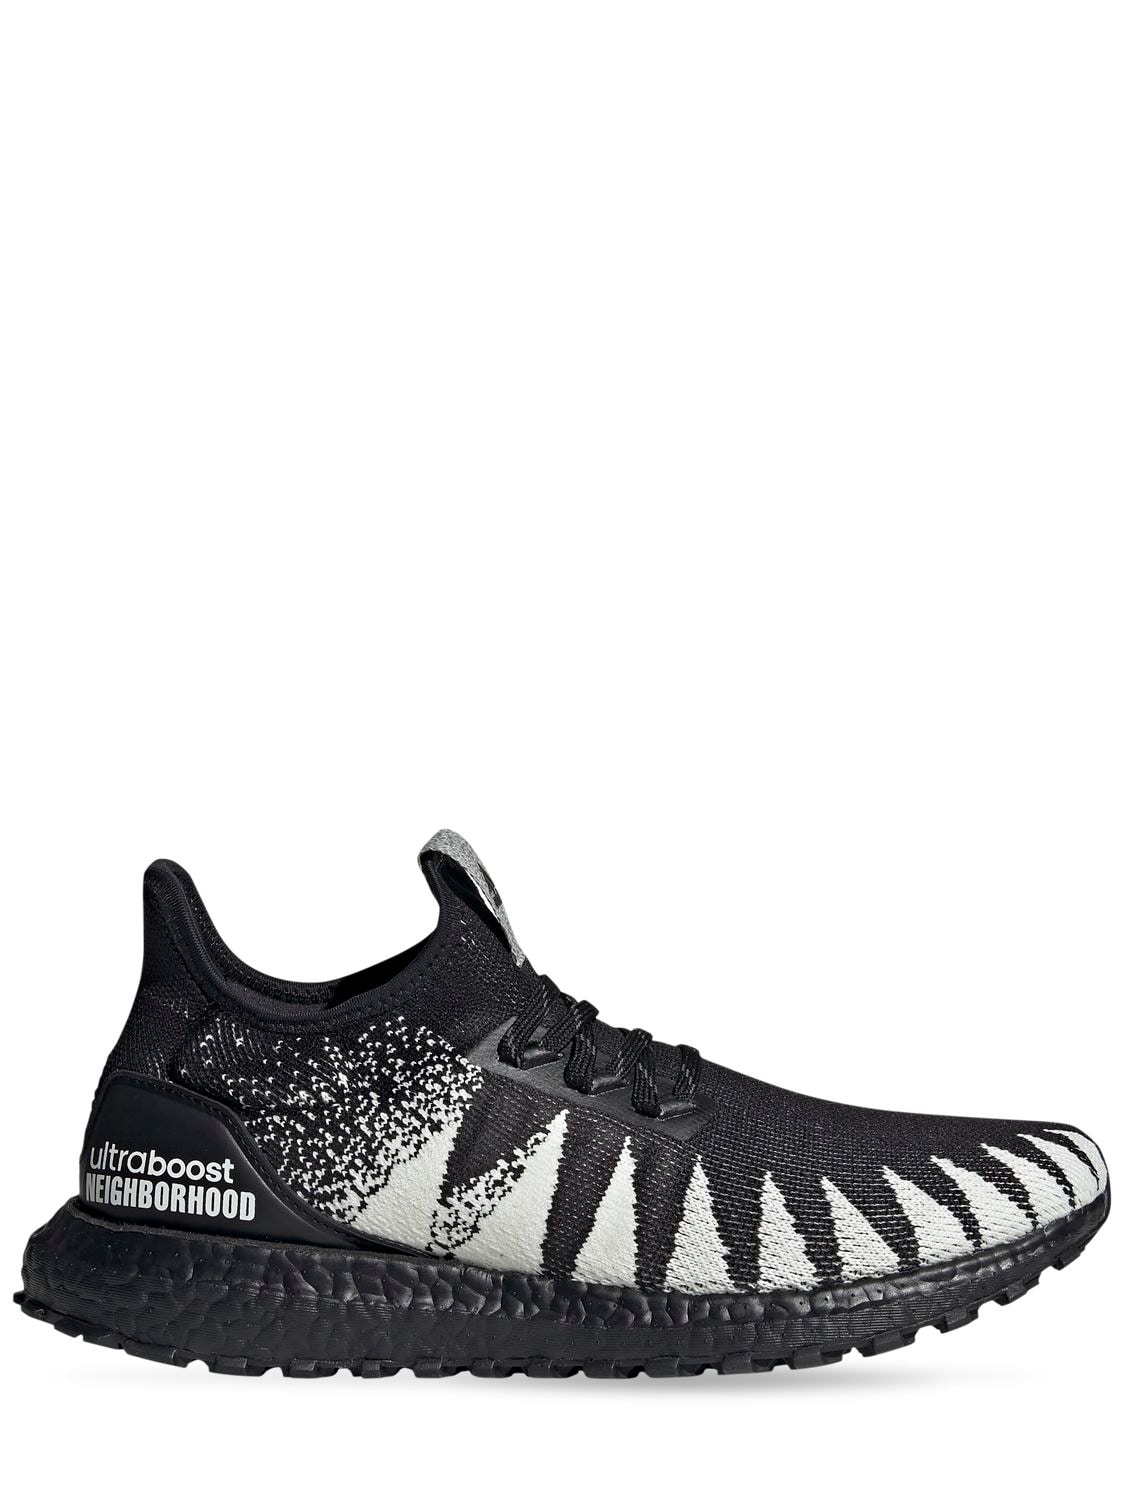 Adidas Originals Statement Nbhd Ub All Terrain Sneakers In Black